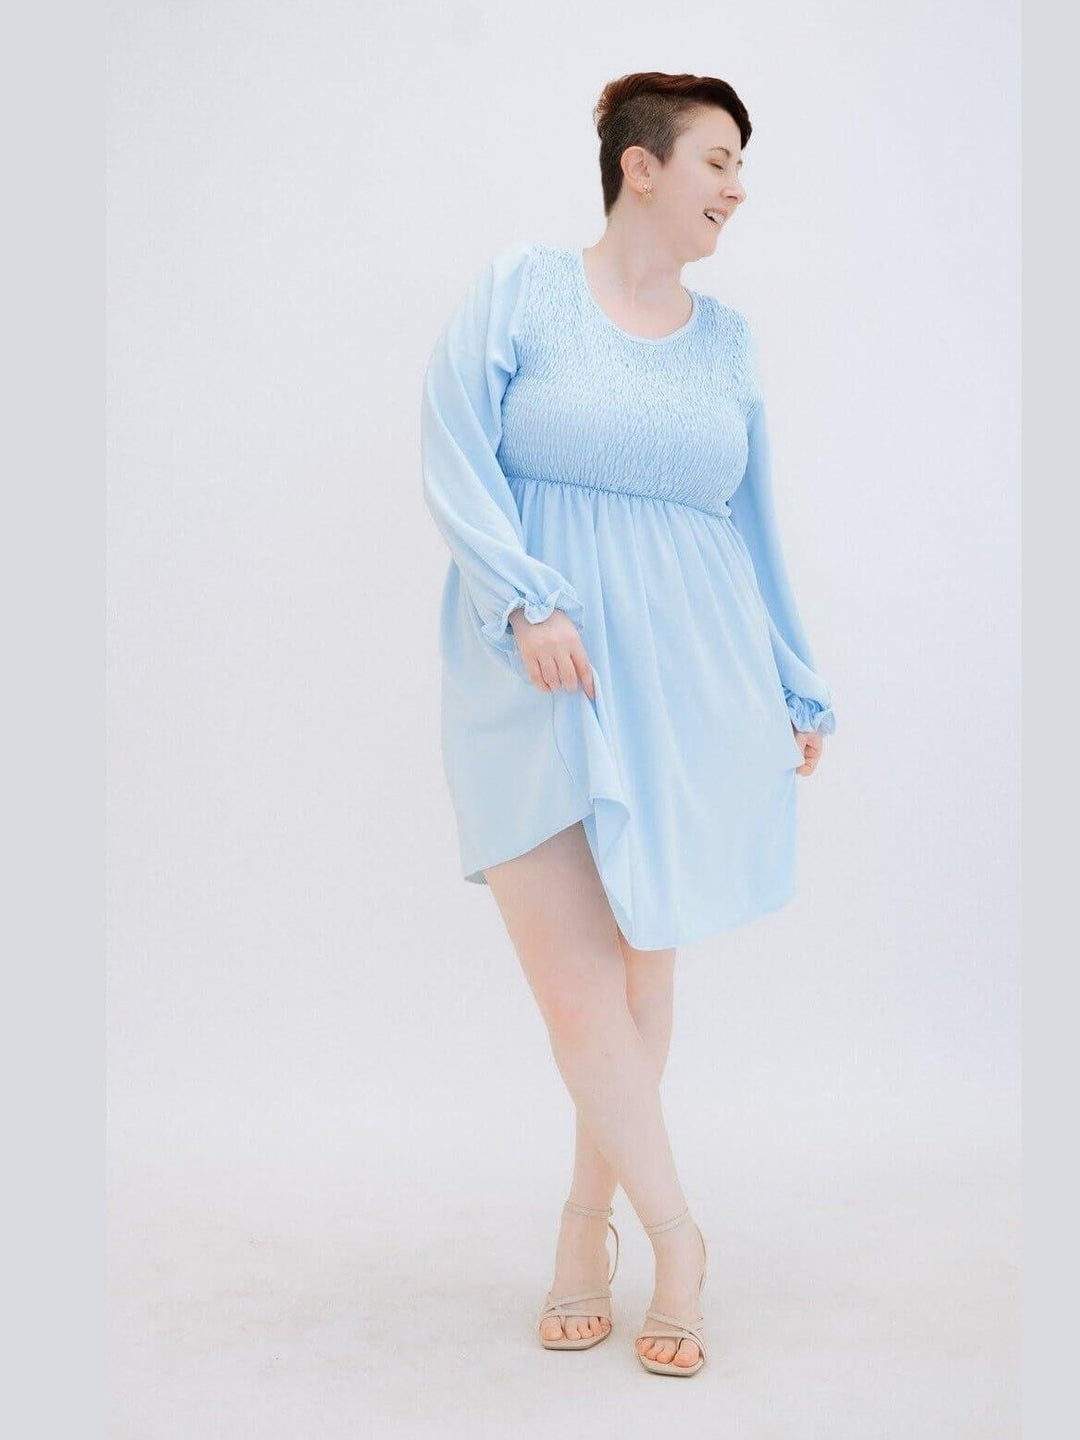 Curvy Blue Sky Dress with Smocking - Lolo Viv Boutique